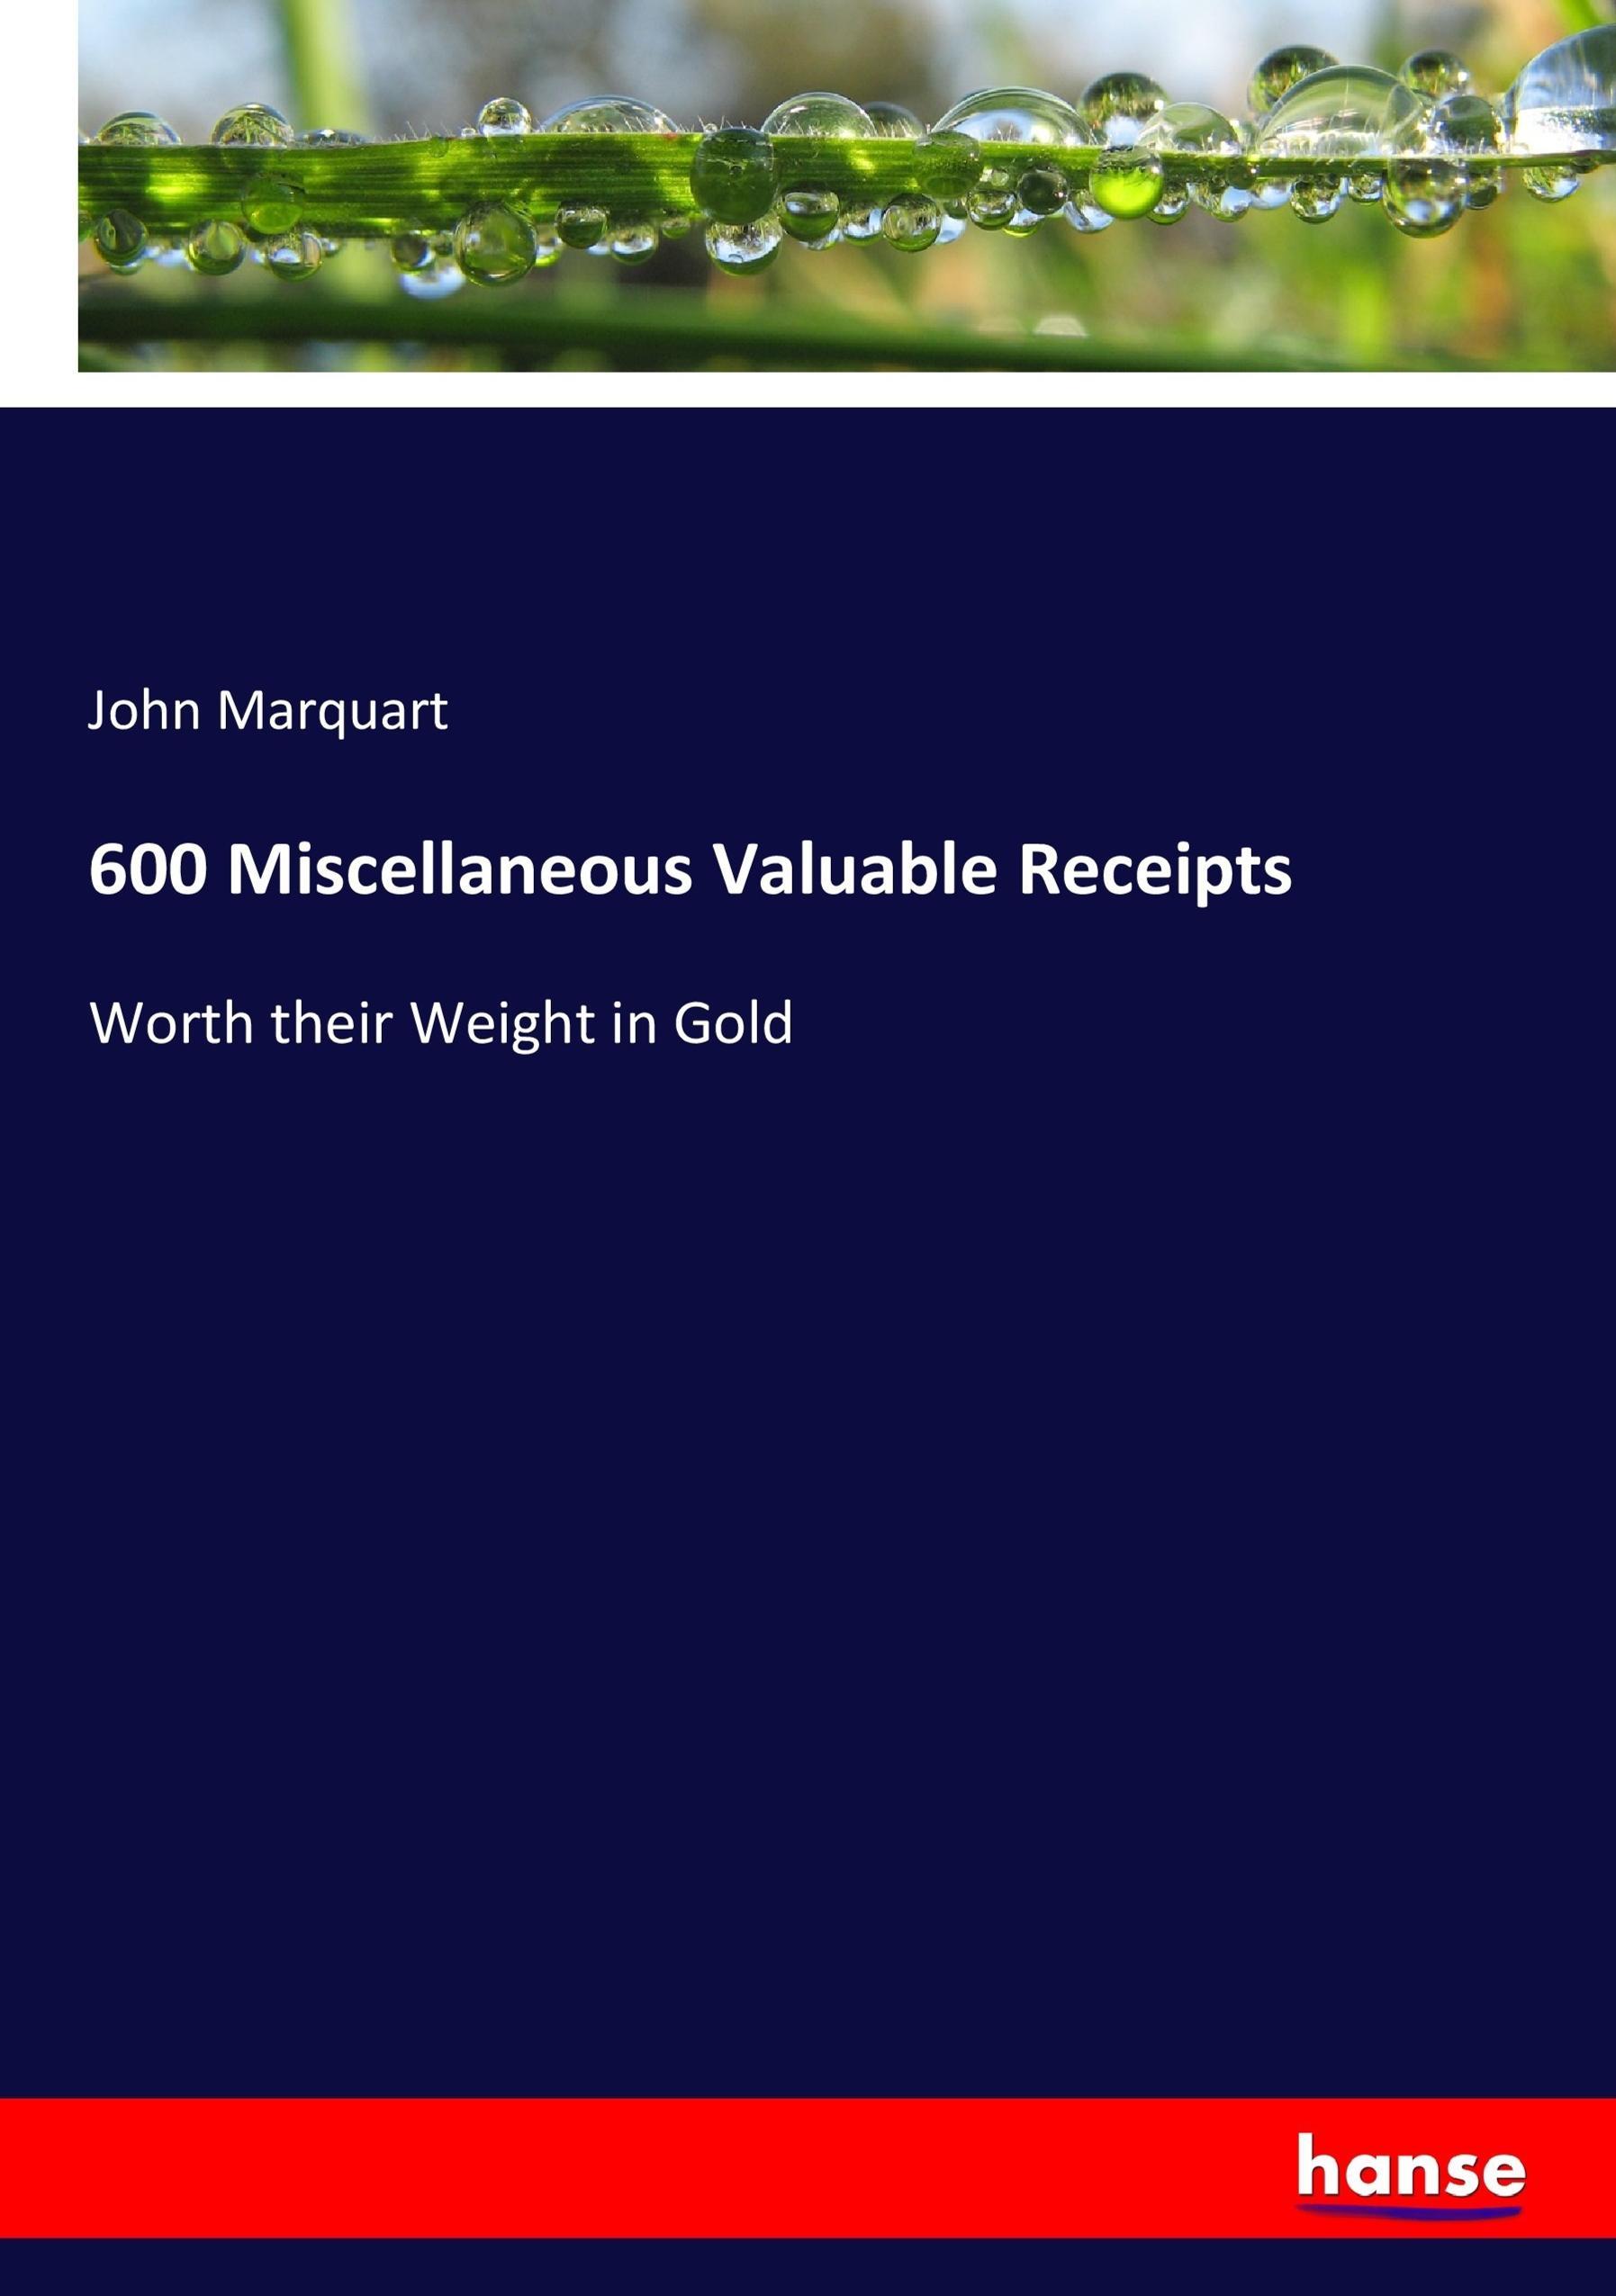 600 Miscellaneous Valuable Receipts - Marquart, John